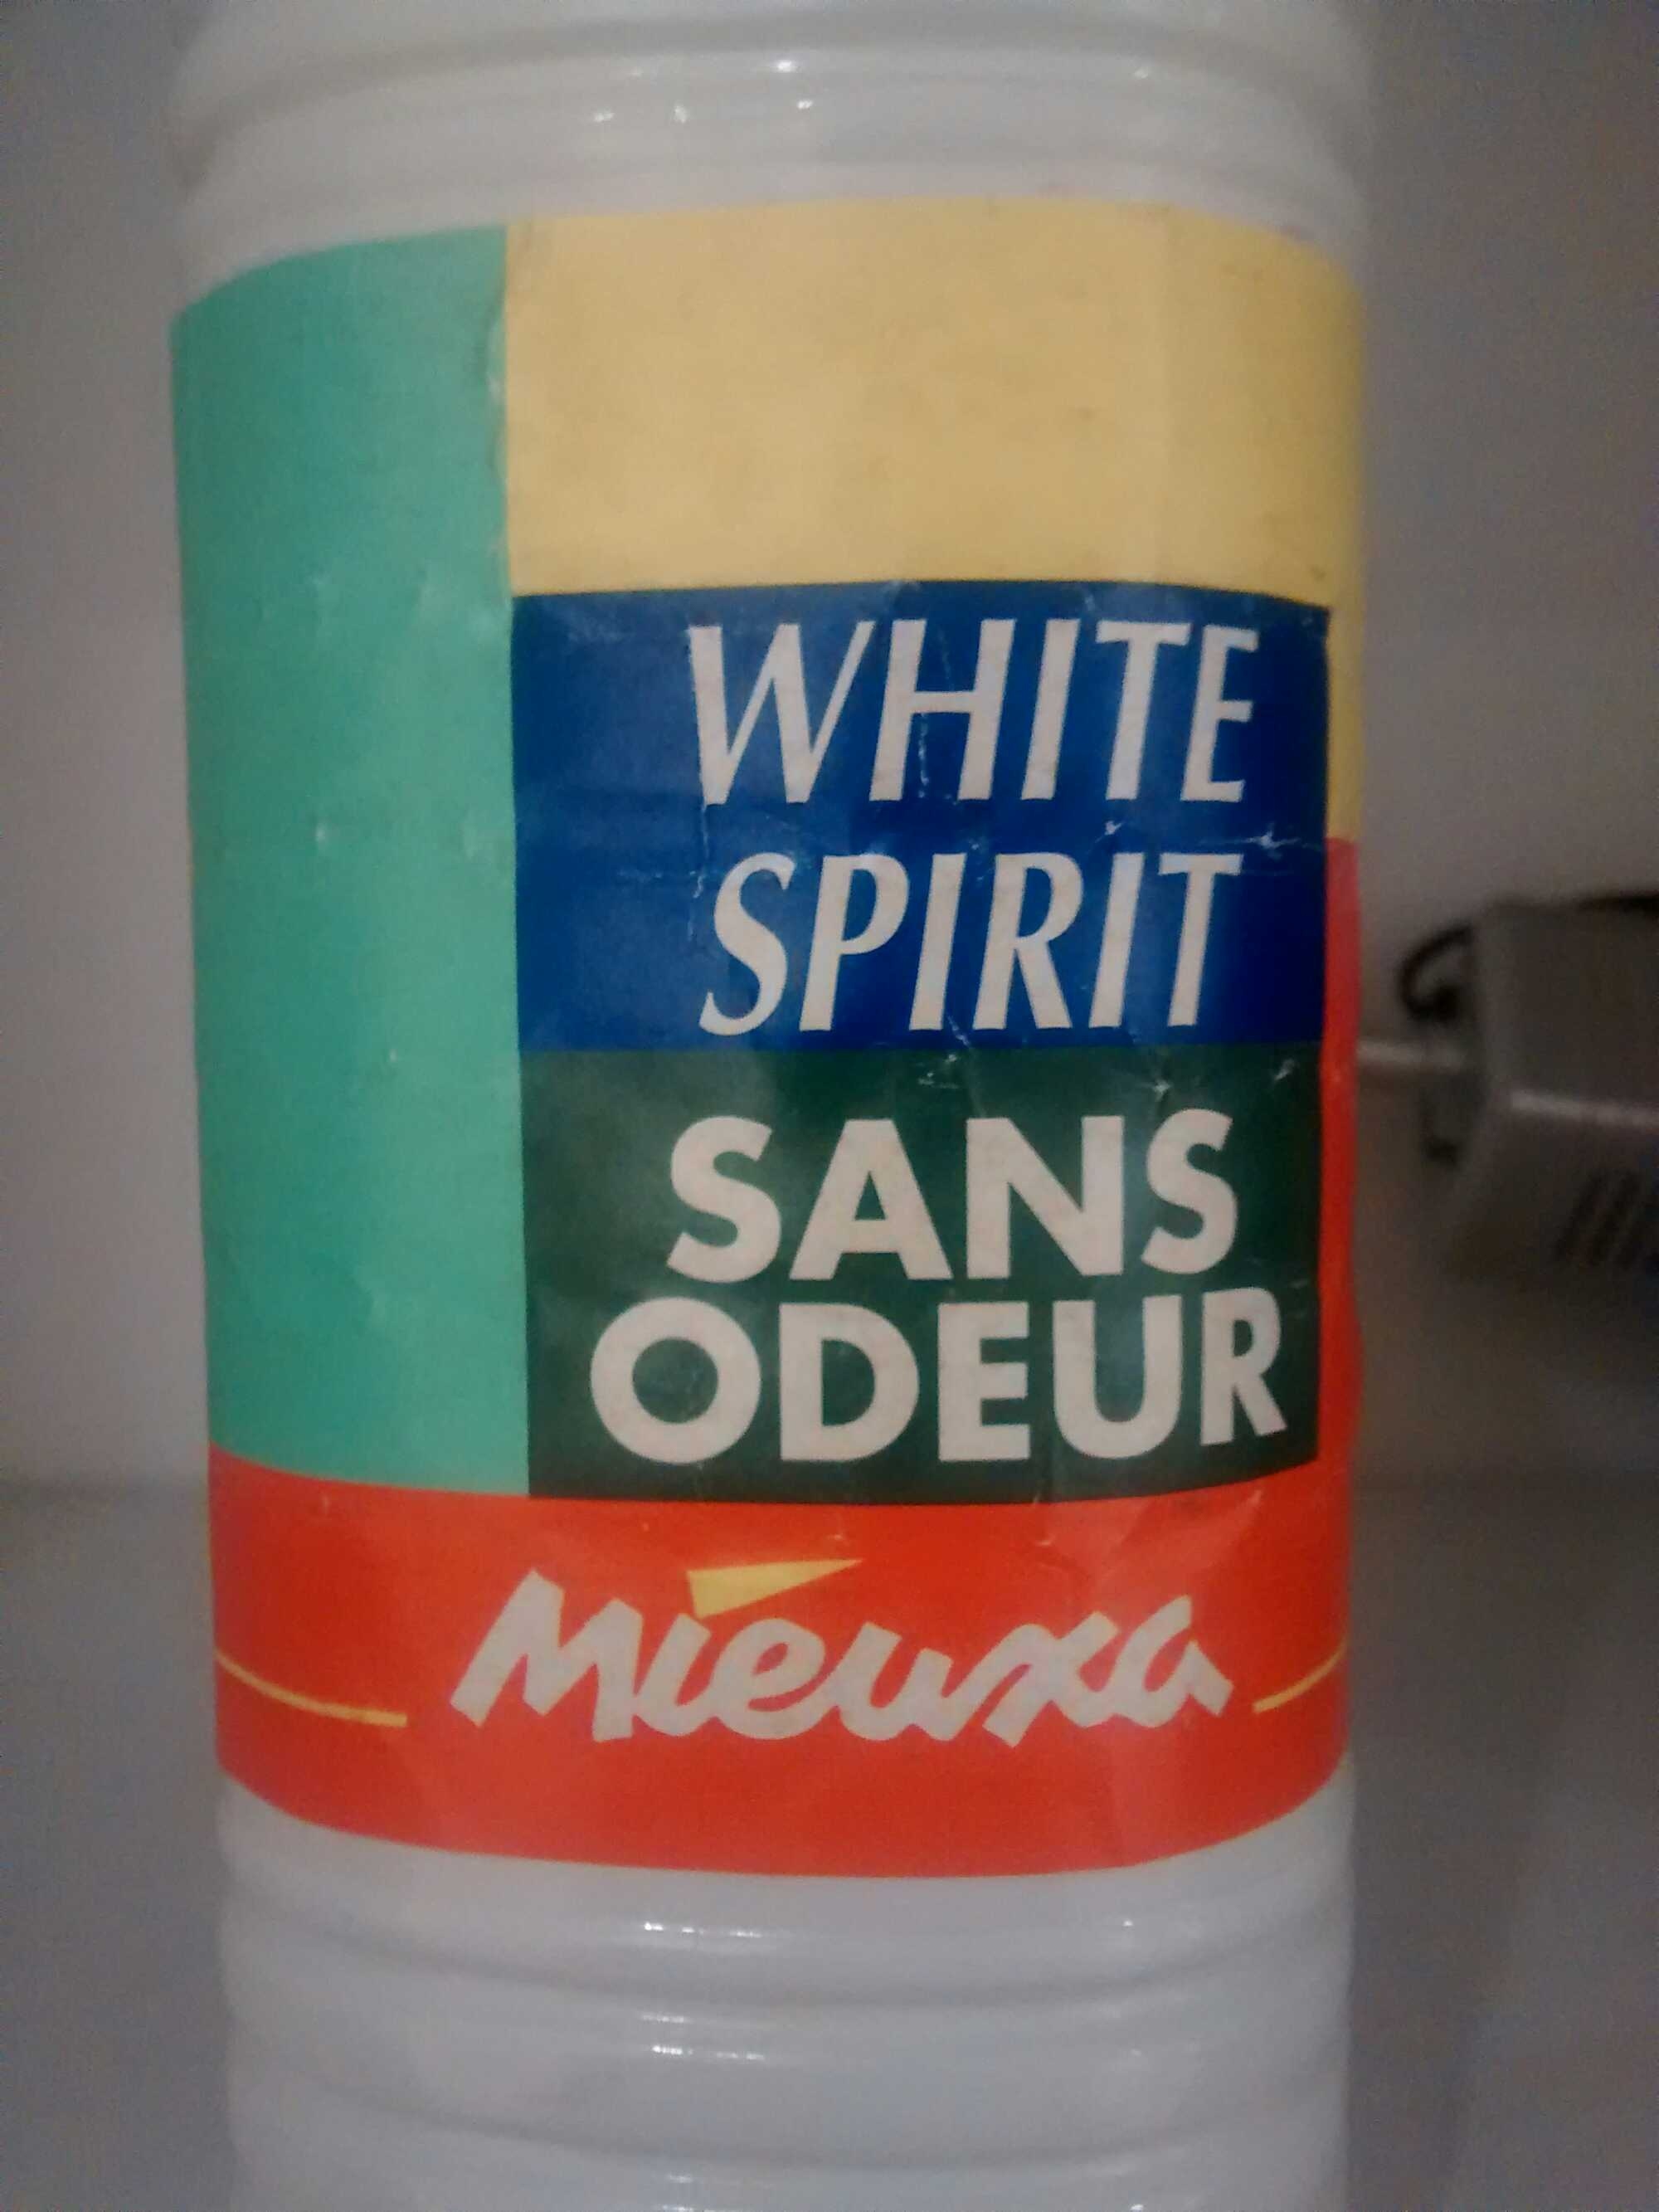 White spirit sans odeur - Product - en